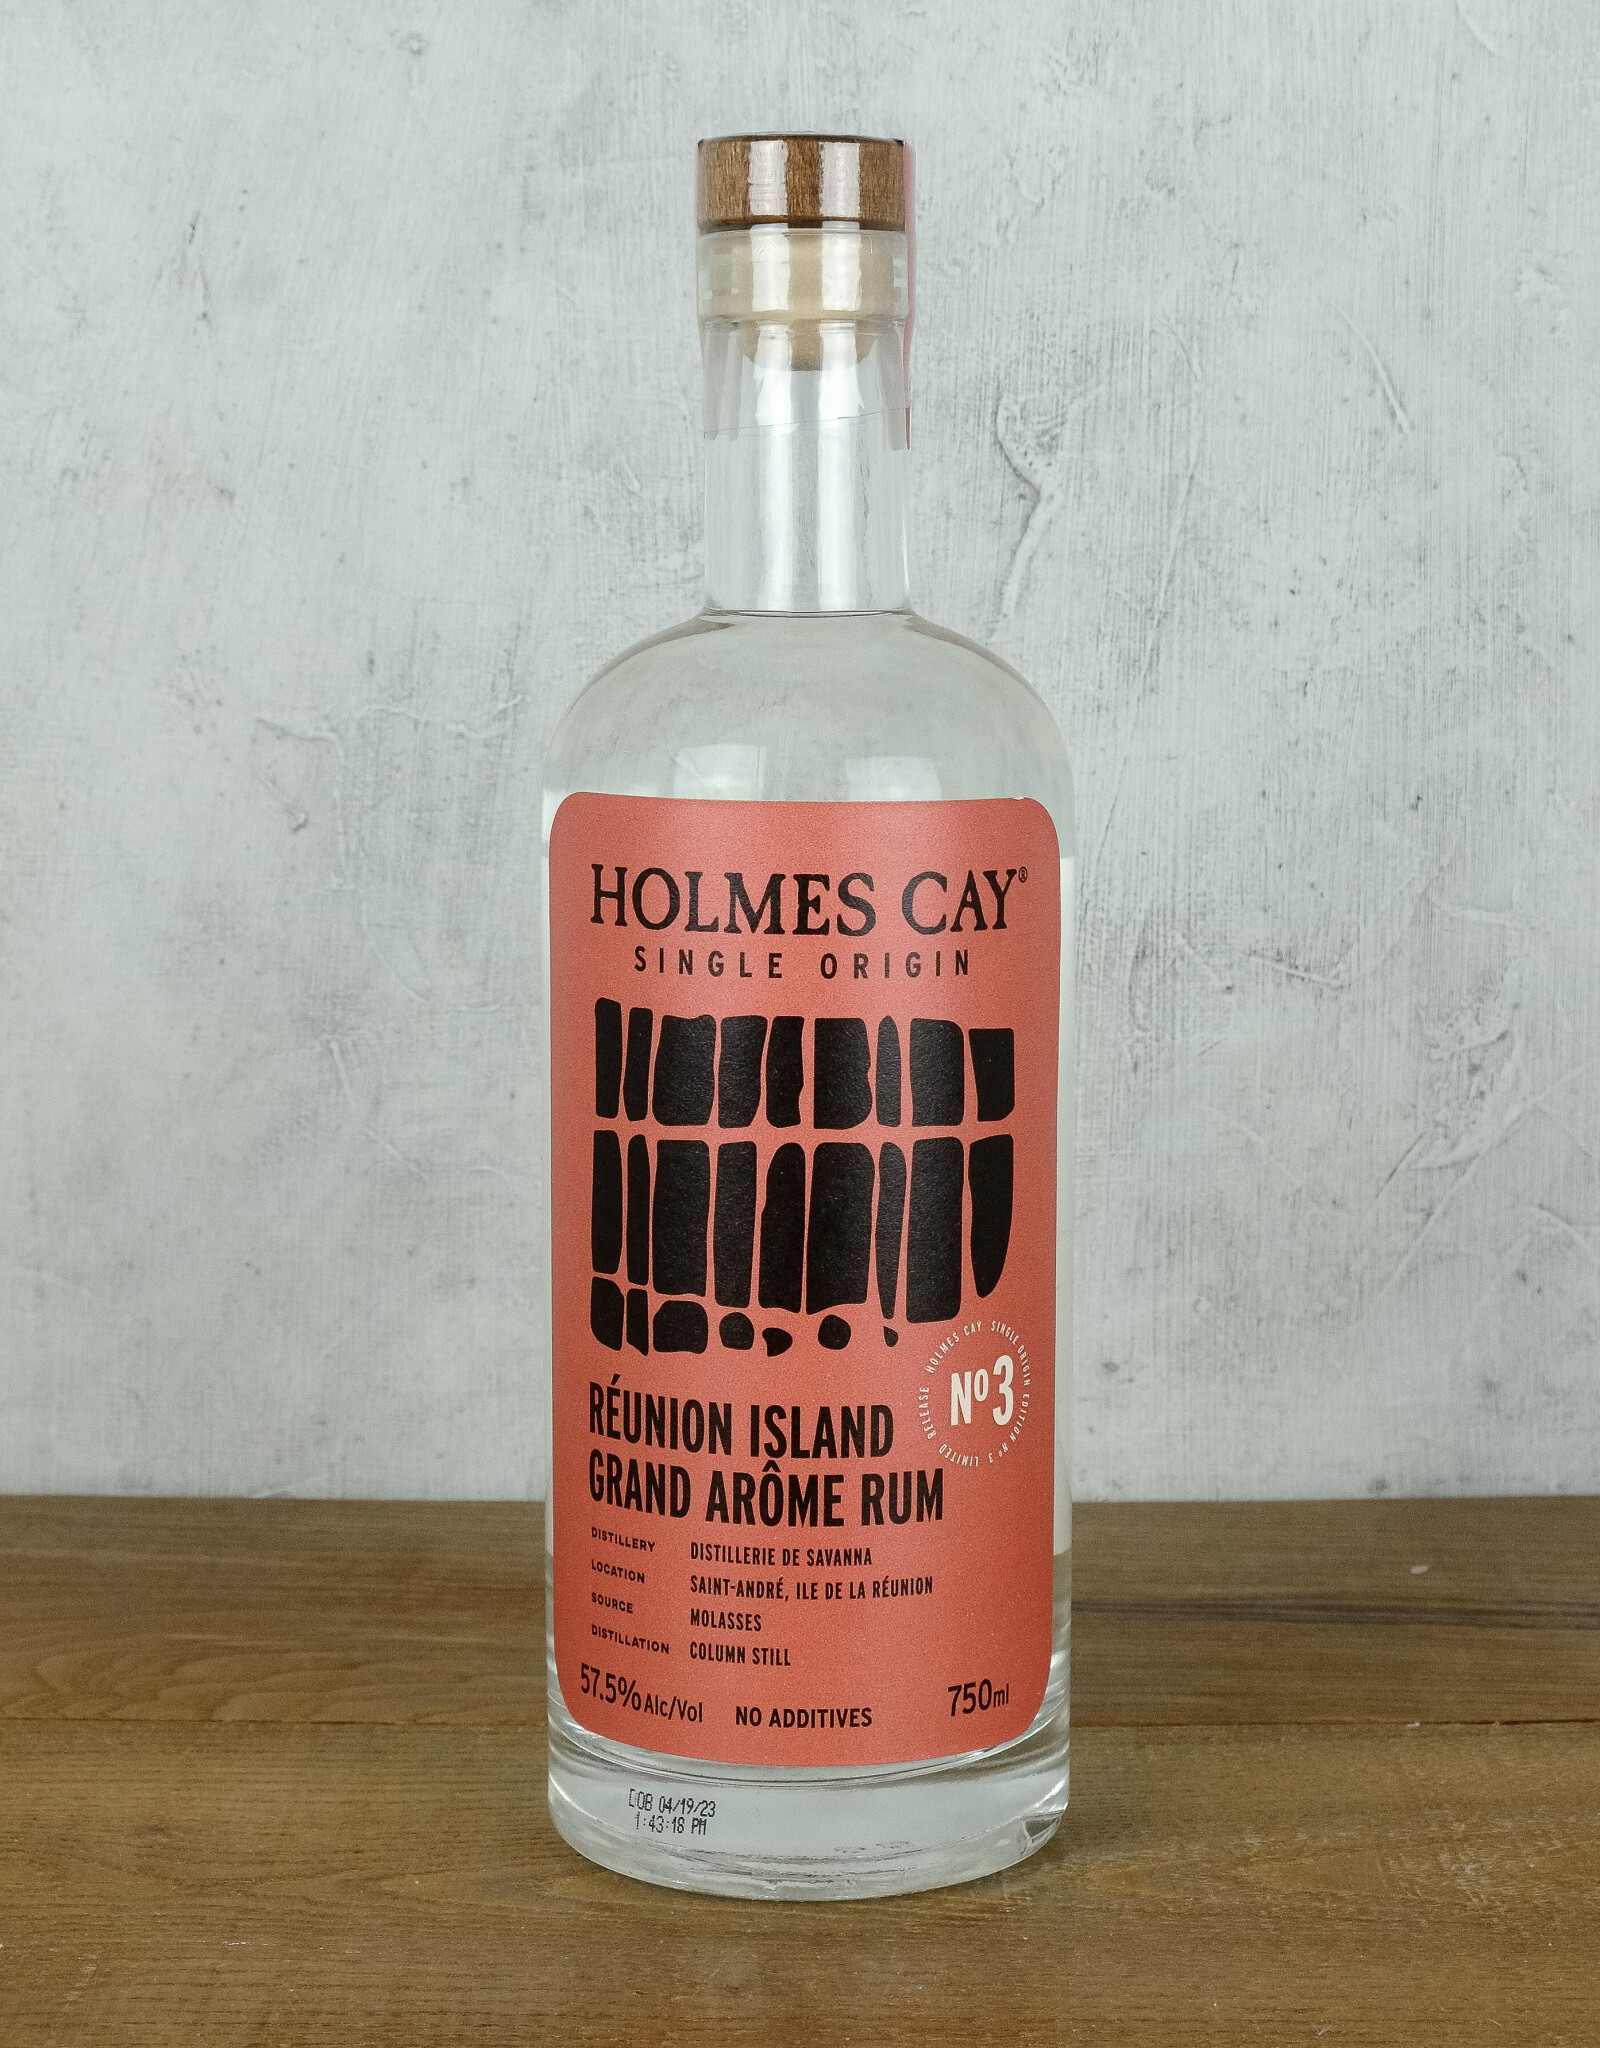 Holmes Cay Reunion Island Grand Arome Rum